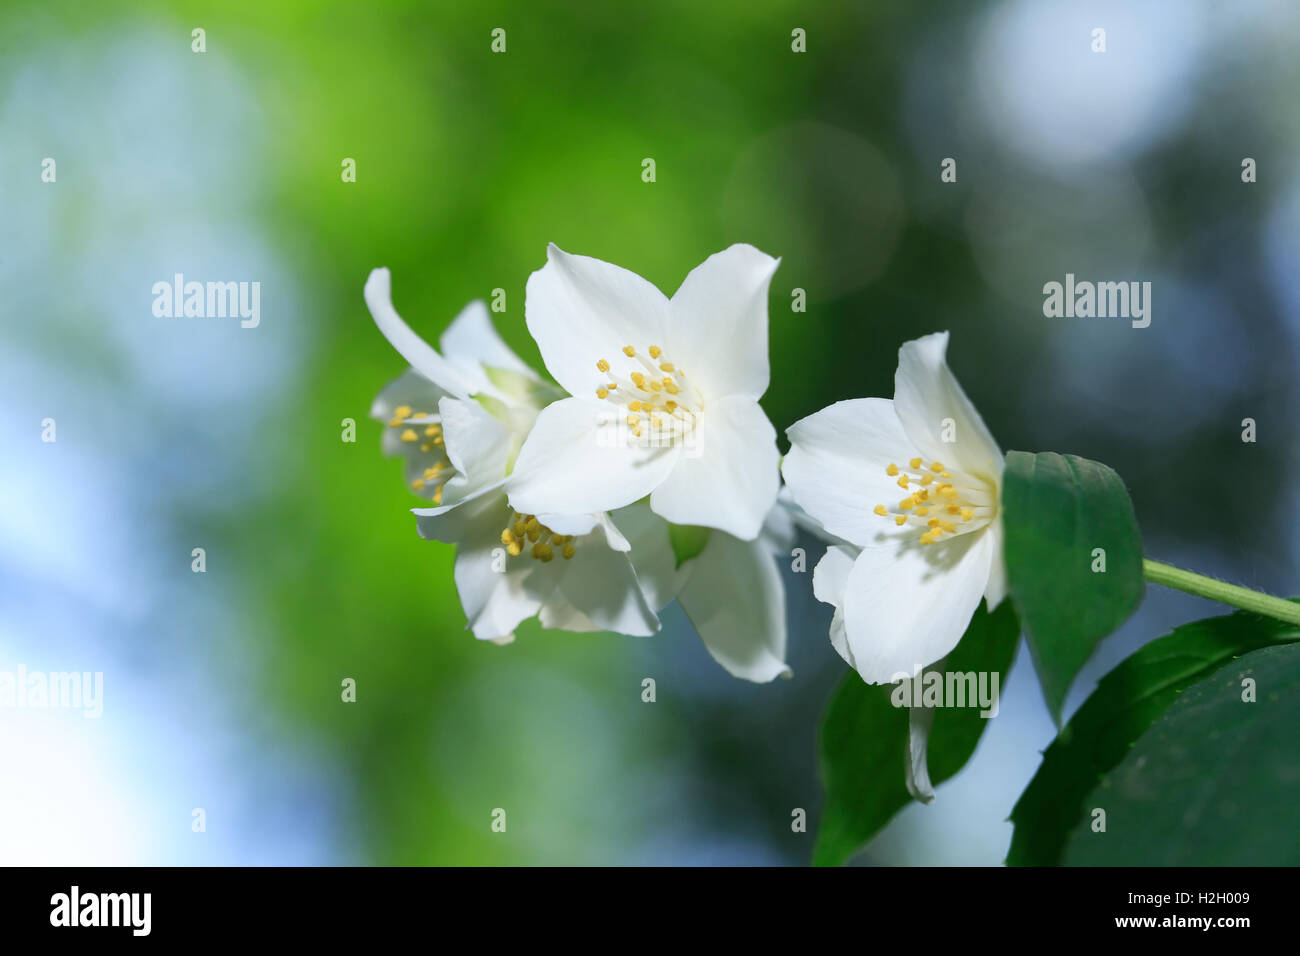 Branch of beautiful white jasmine flowers on green background Stock Photo